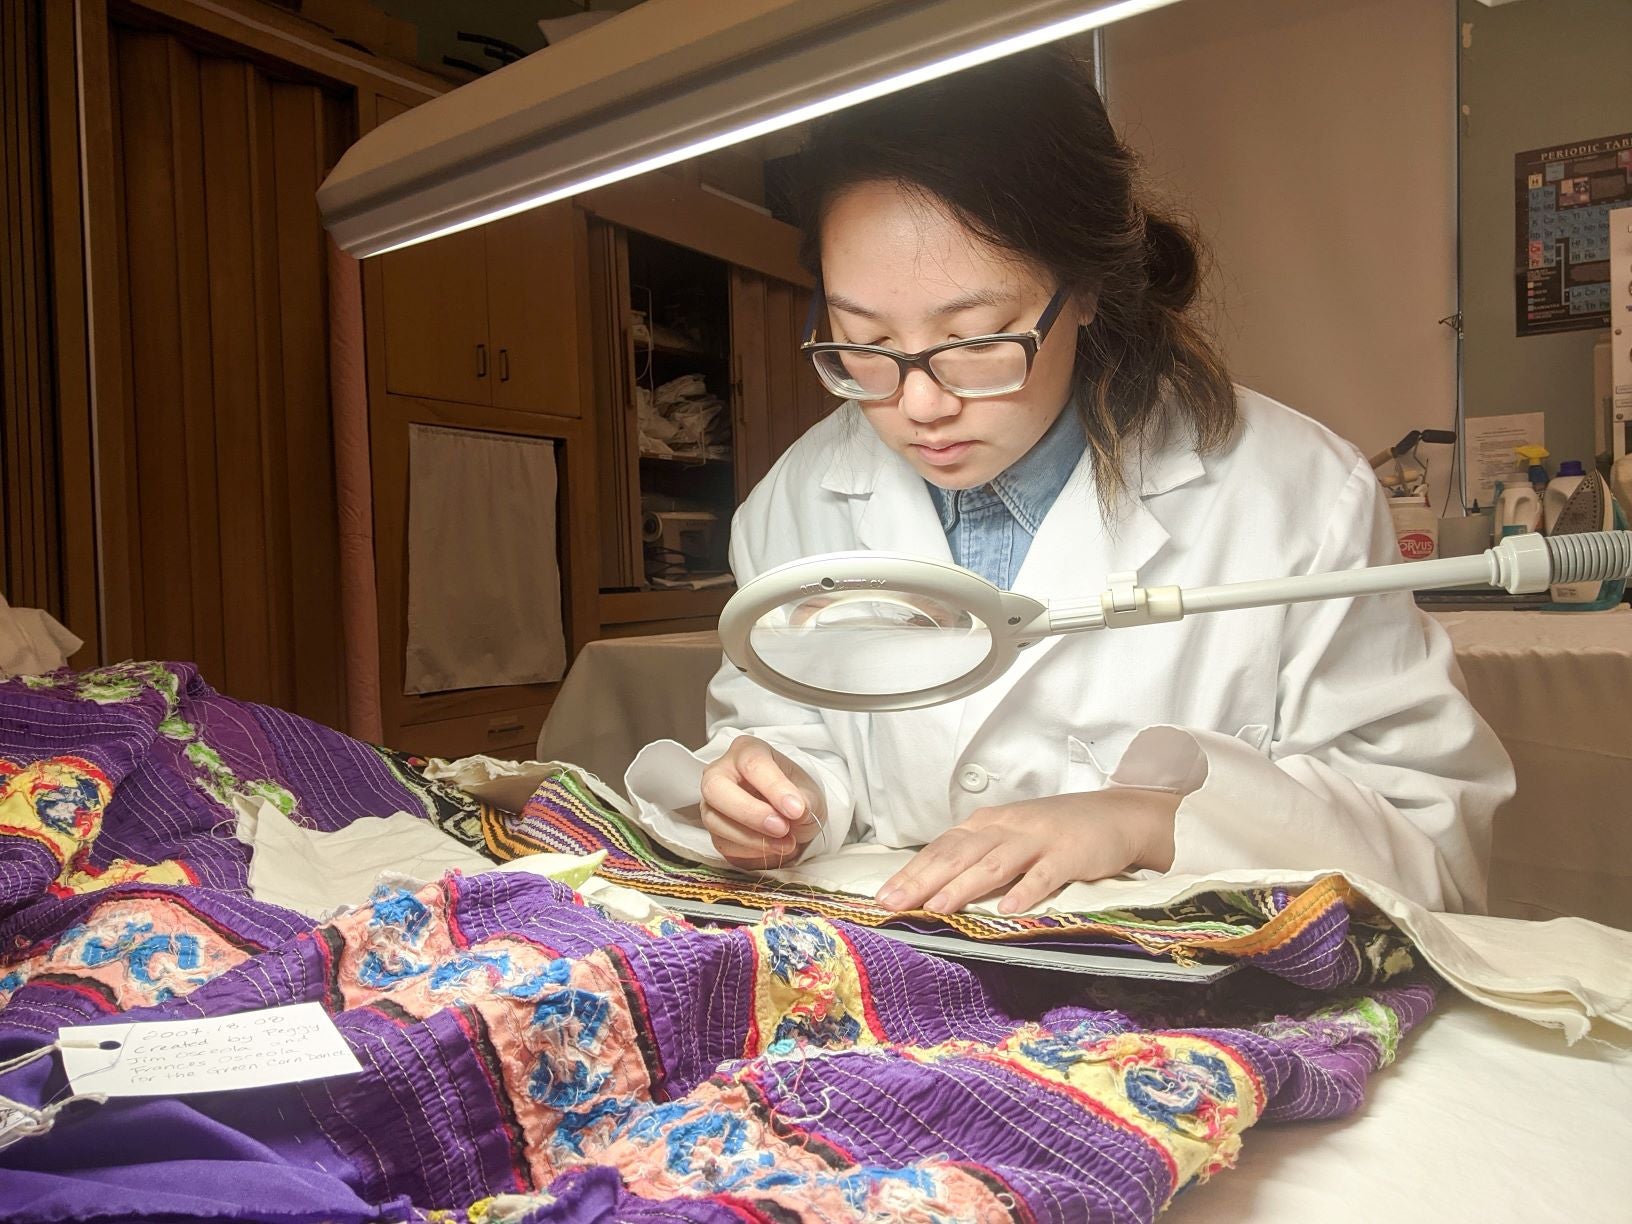 ms student restoring quilt